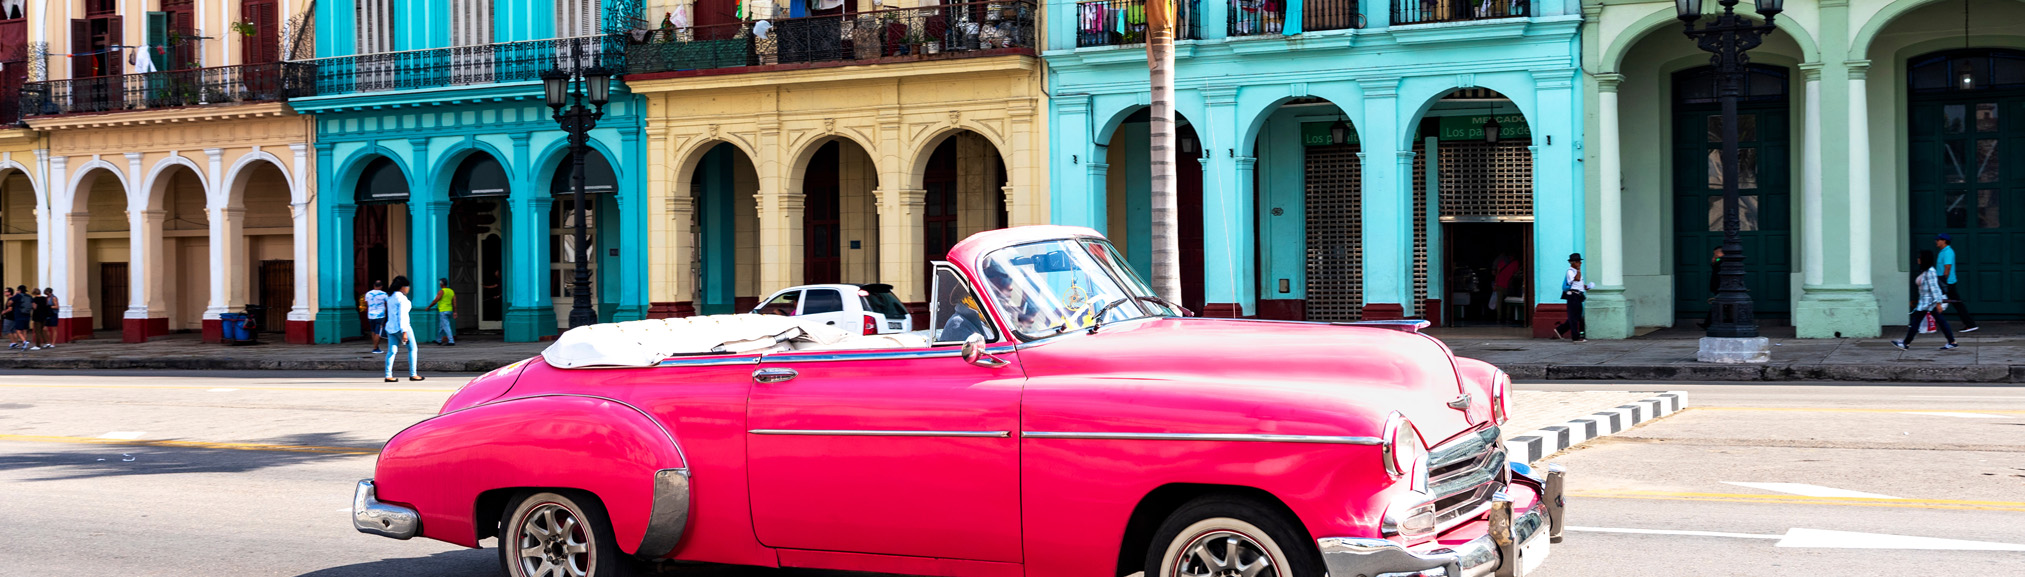 masina colorata pe strazile din Cuba